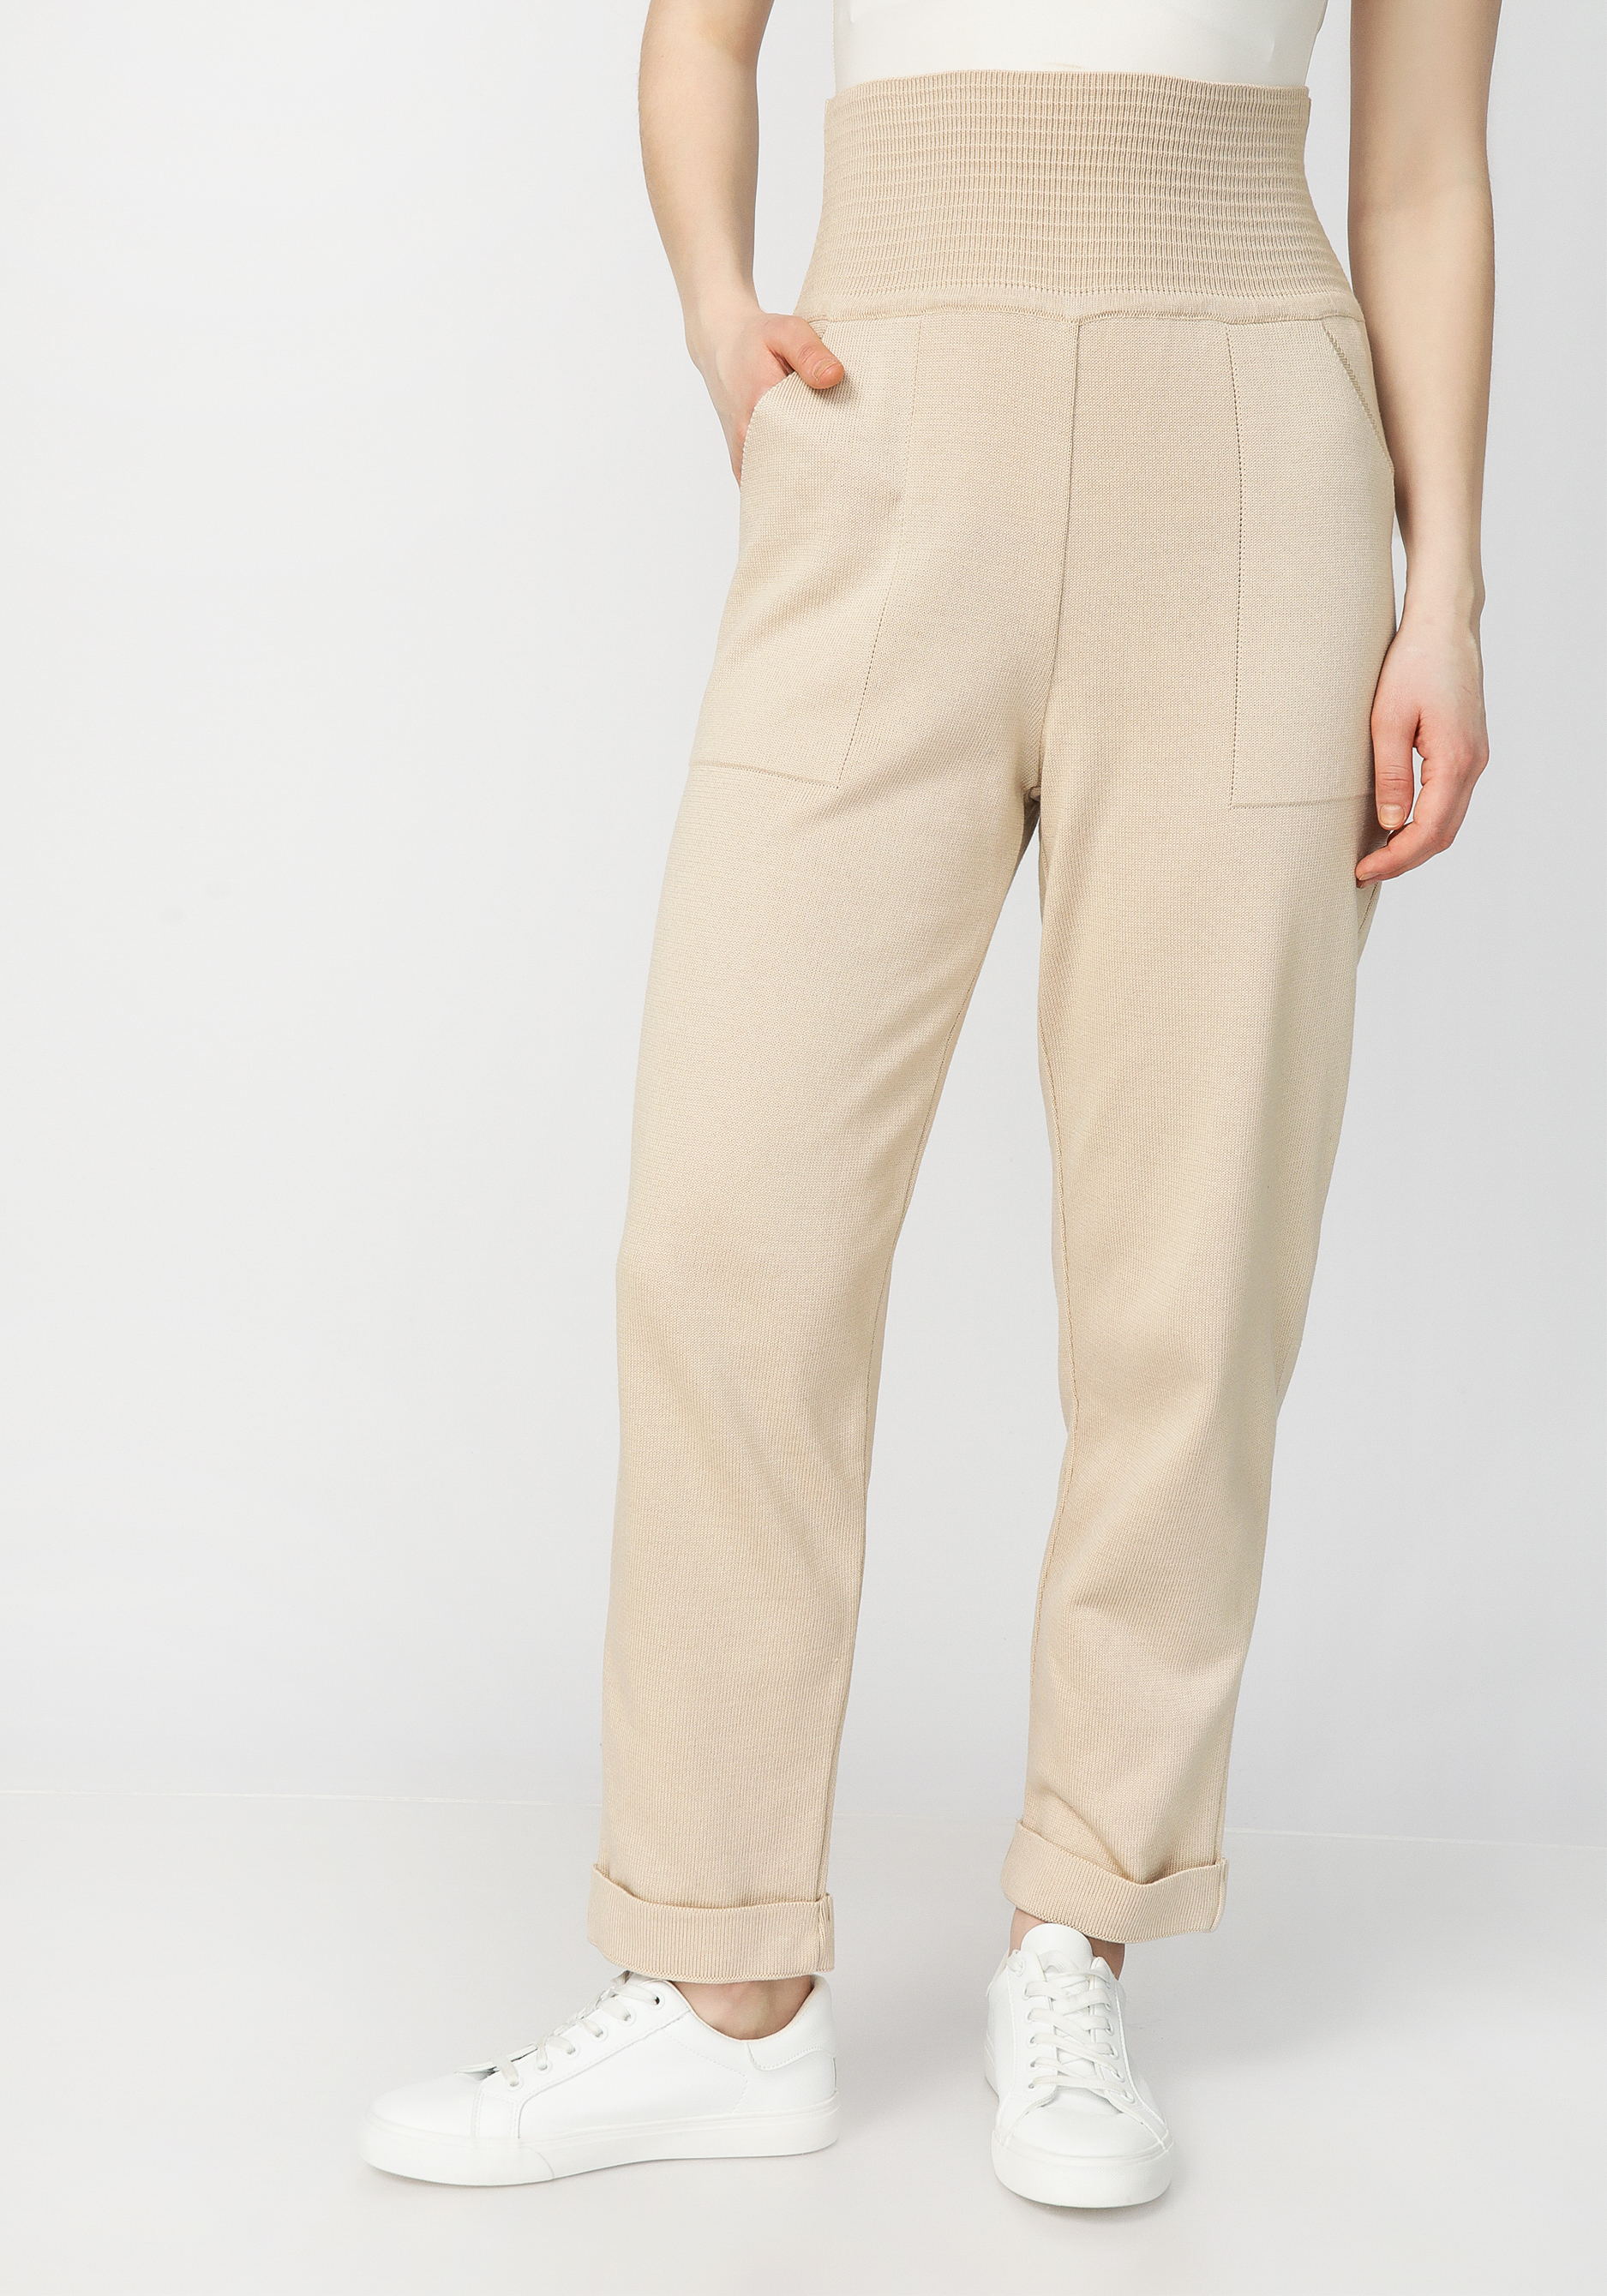 Брюки на широкой эластичной резинке пижама сорочка брюки